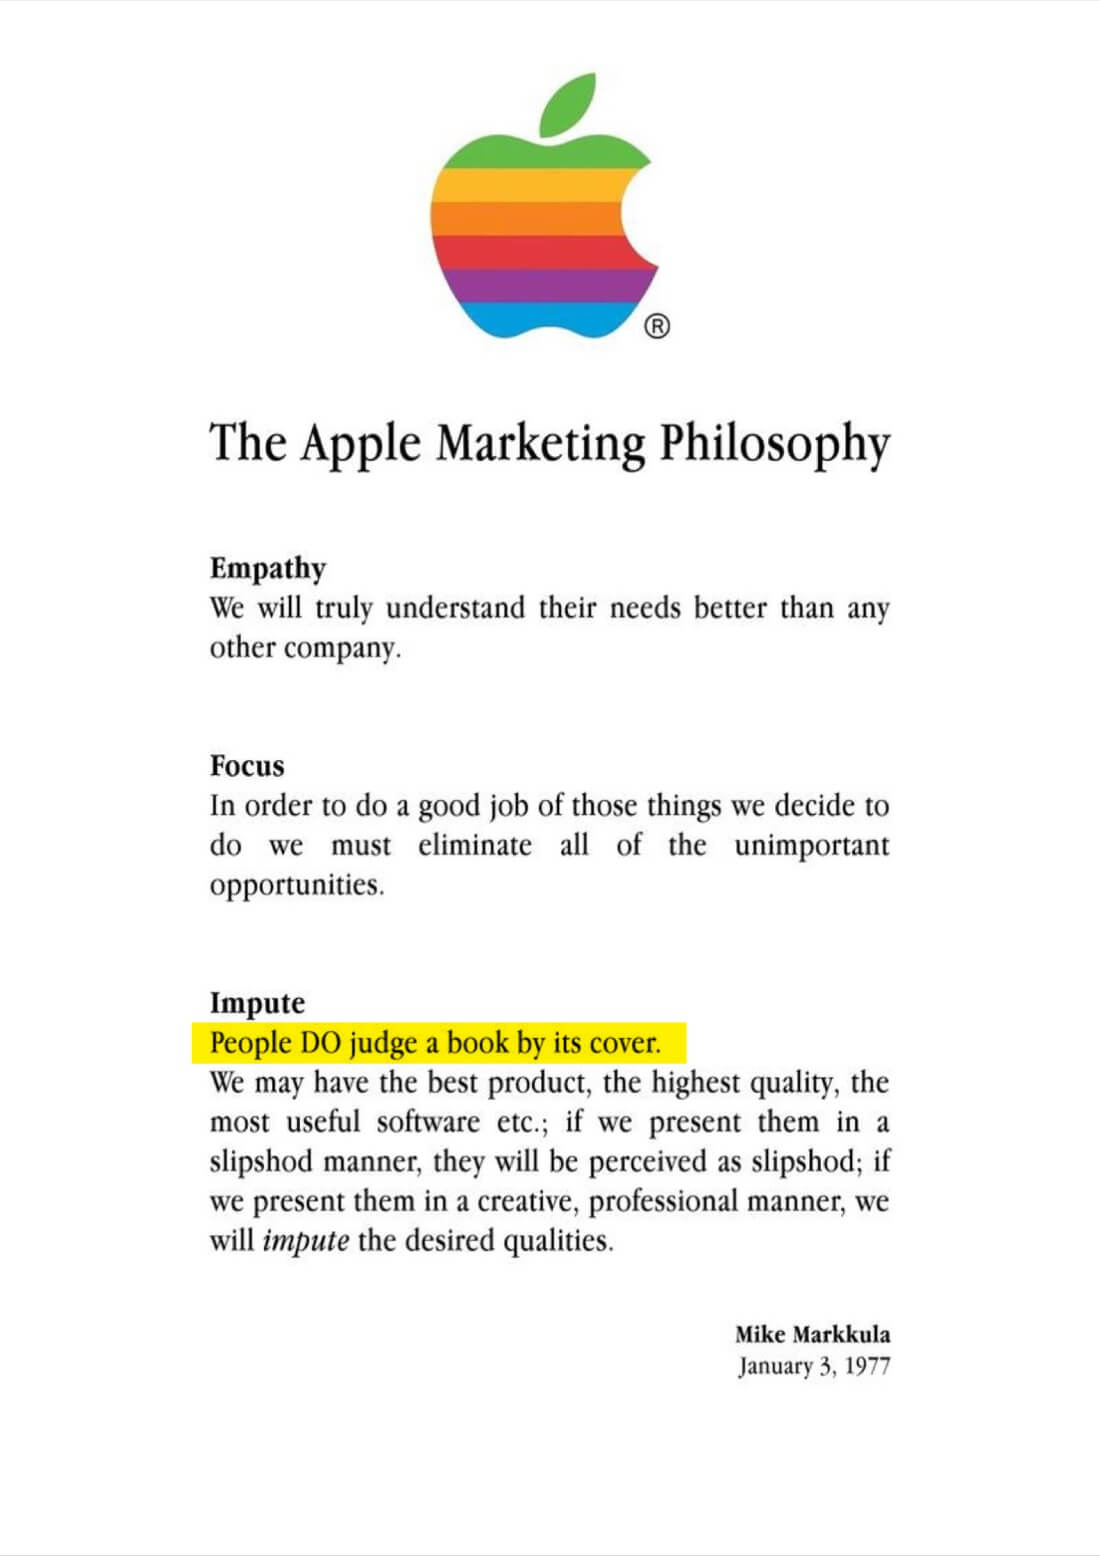 Apple philosophy of marketing